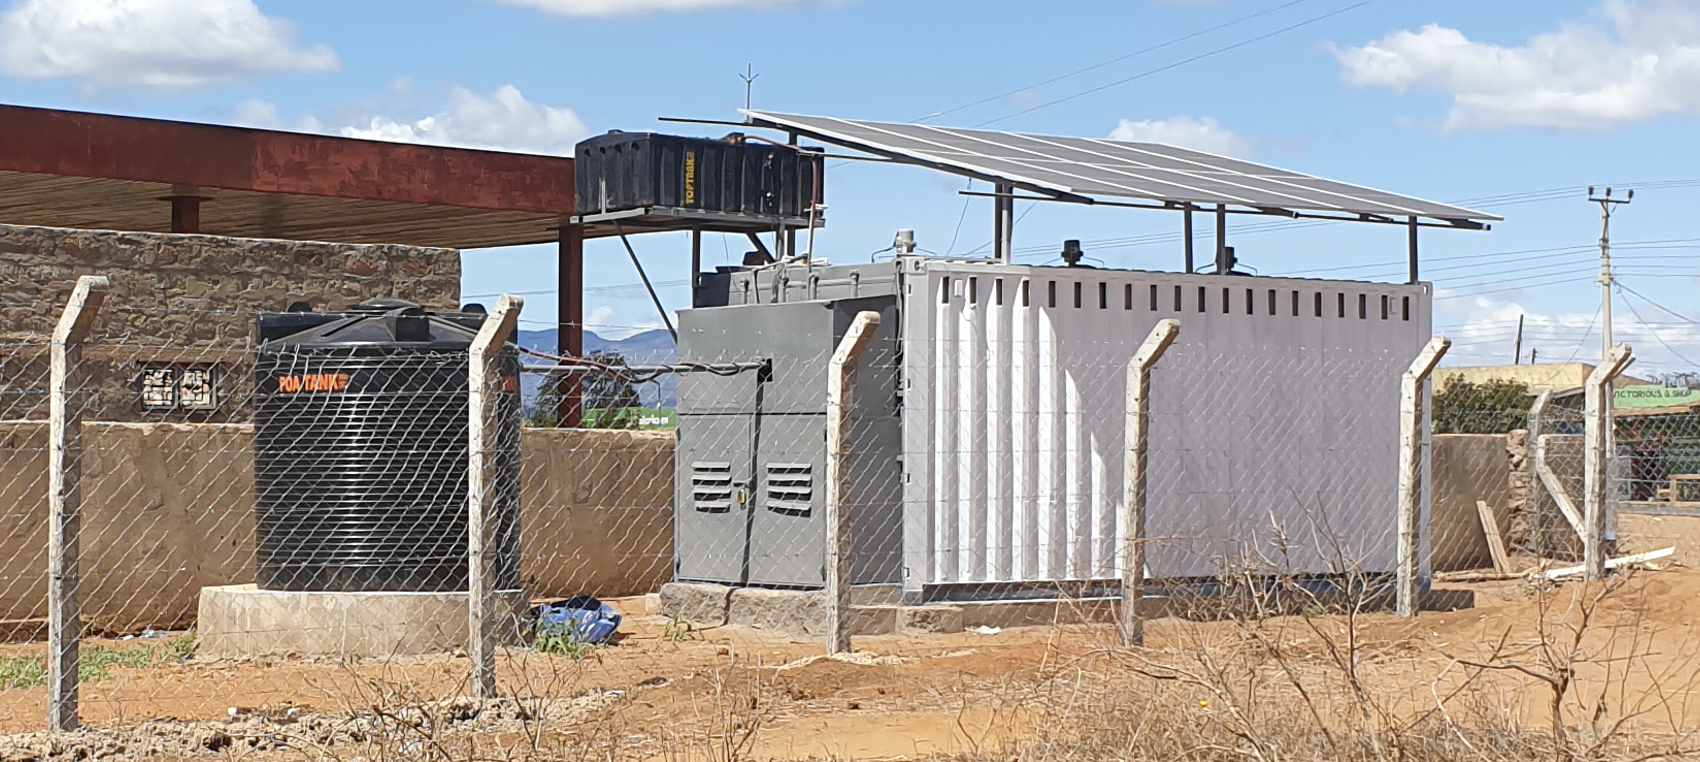 Forced-air evaporative cooling chamber in Kibwezi, Kenya